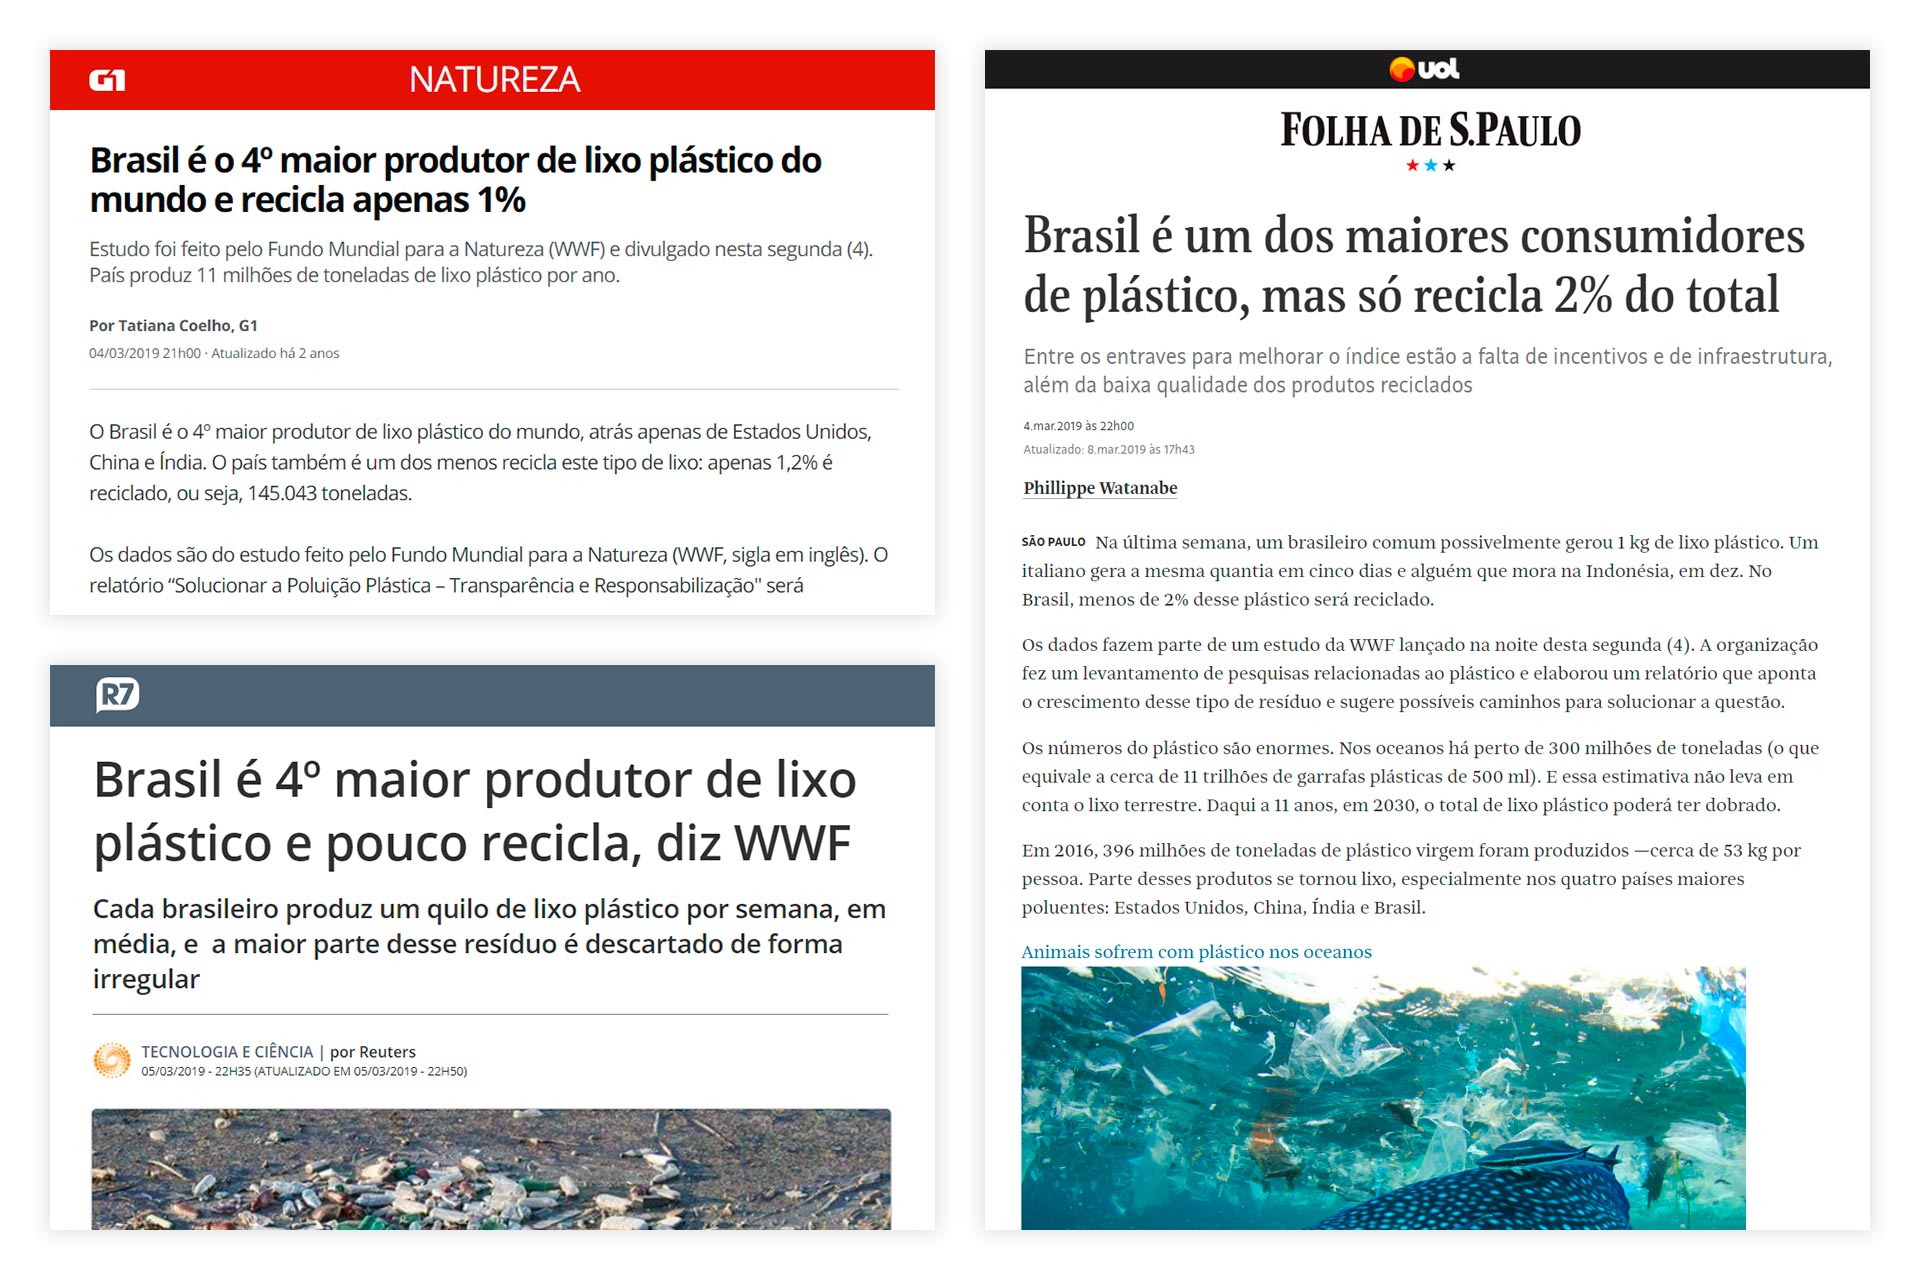 case-agenda-ambiental-wwf-brasil-03